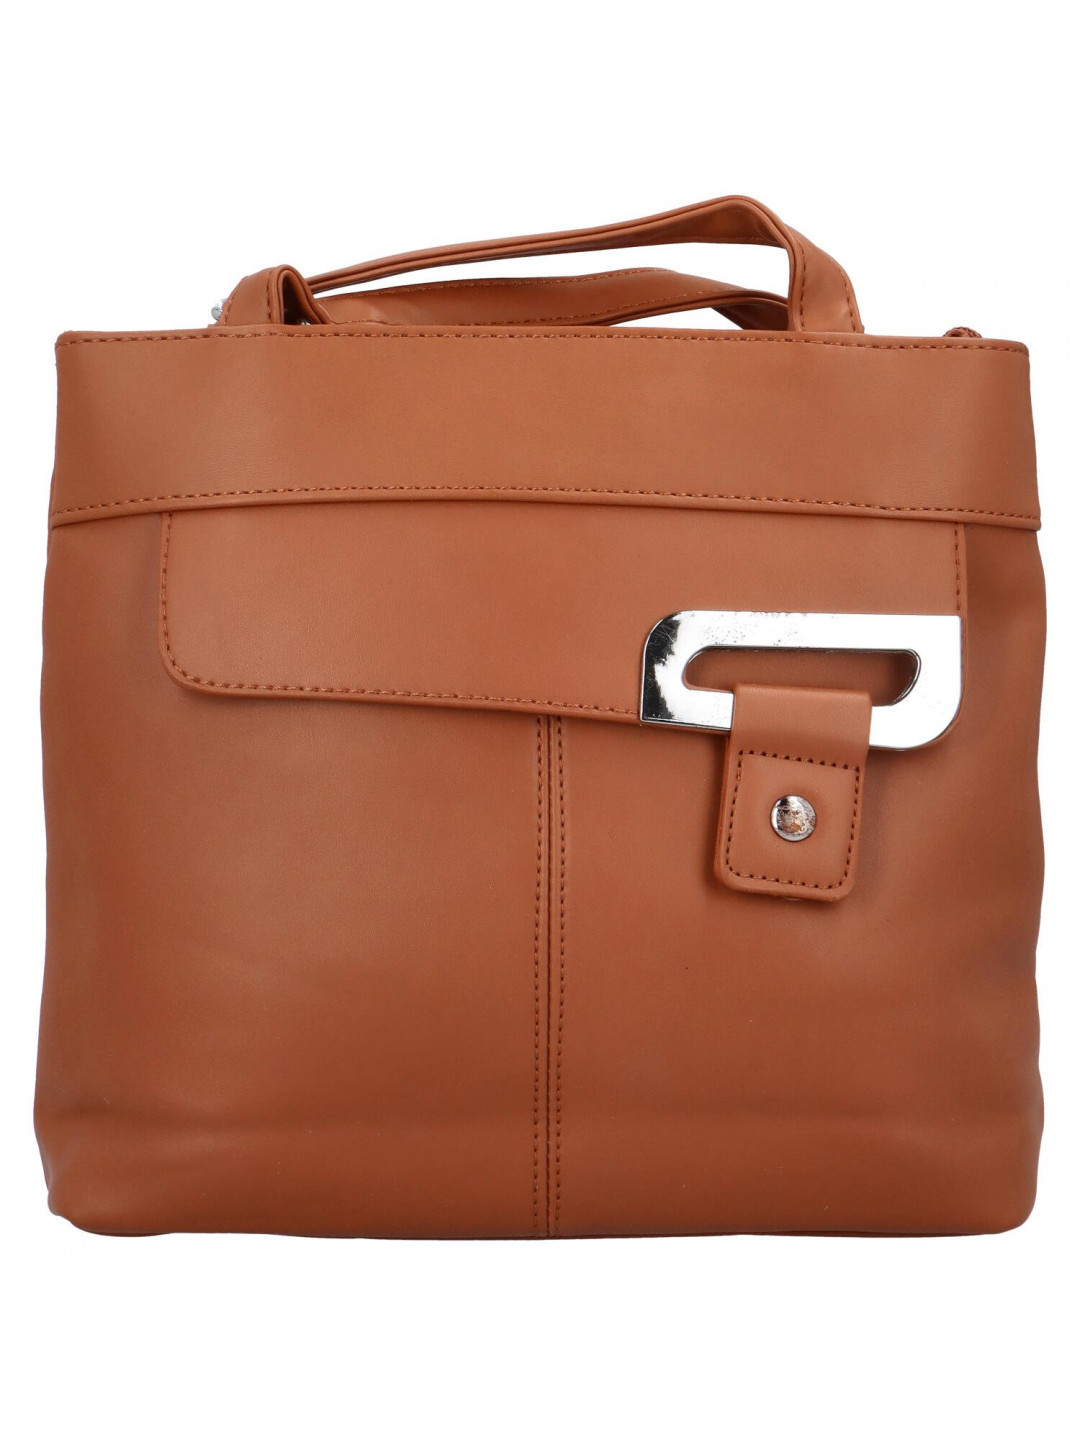 Trendy dámský koženkový kabelko-batůžek Eleana hnědý